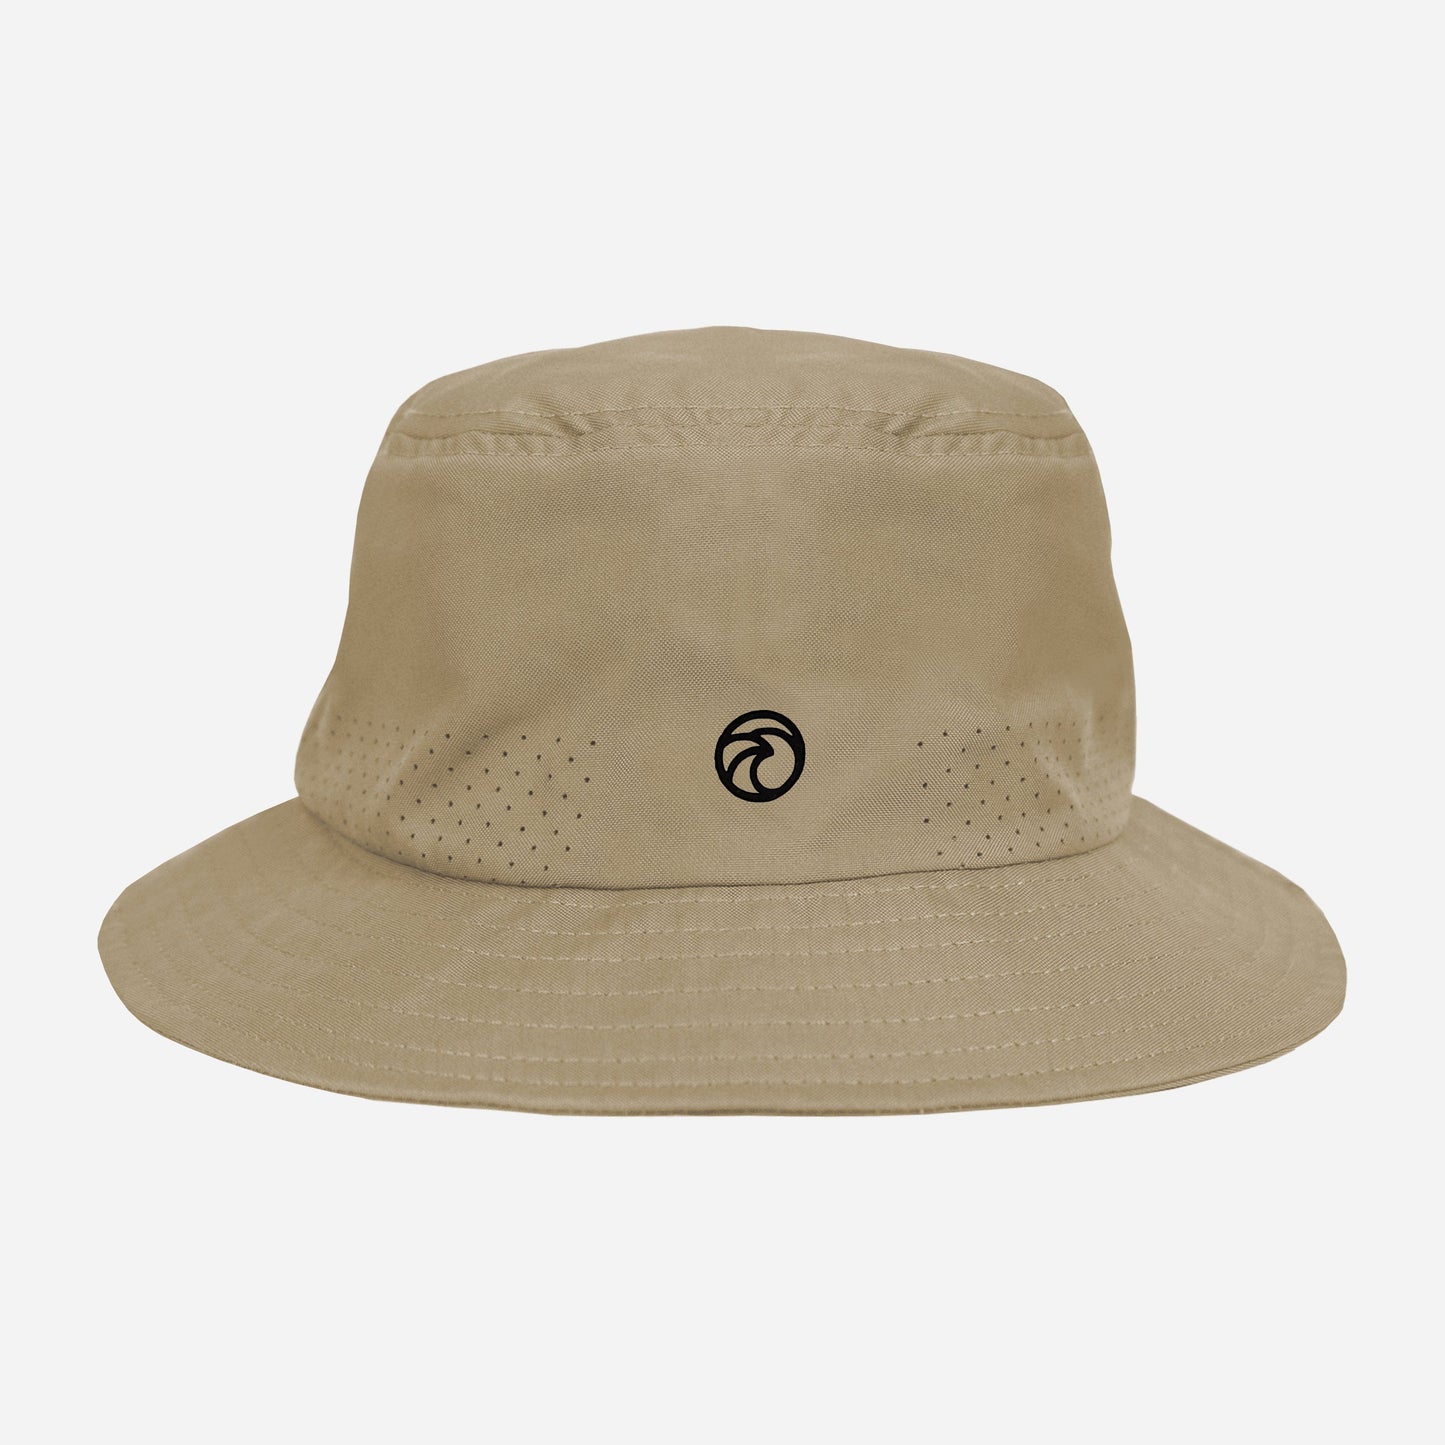 Vapor Apparel Sun Protection Adult Boonie Adventure Hat